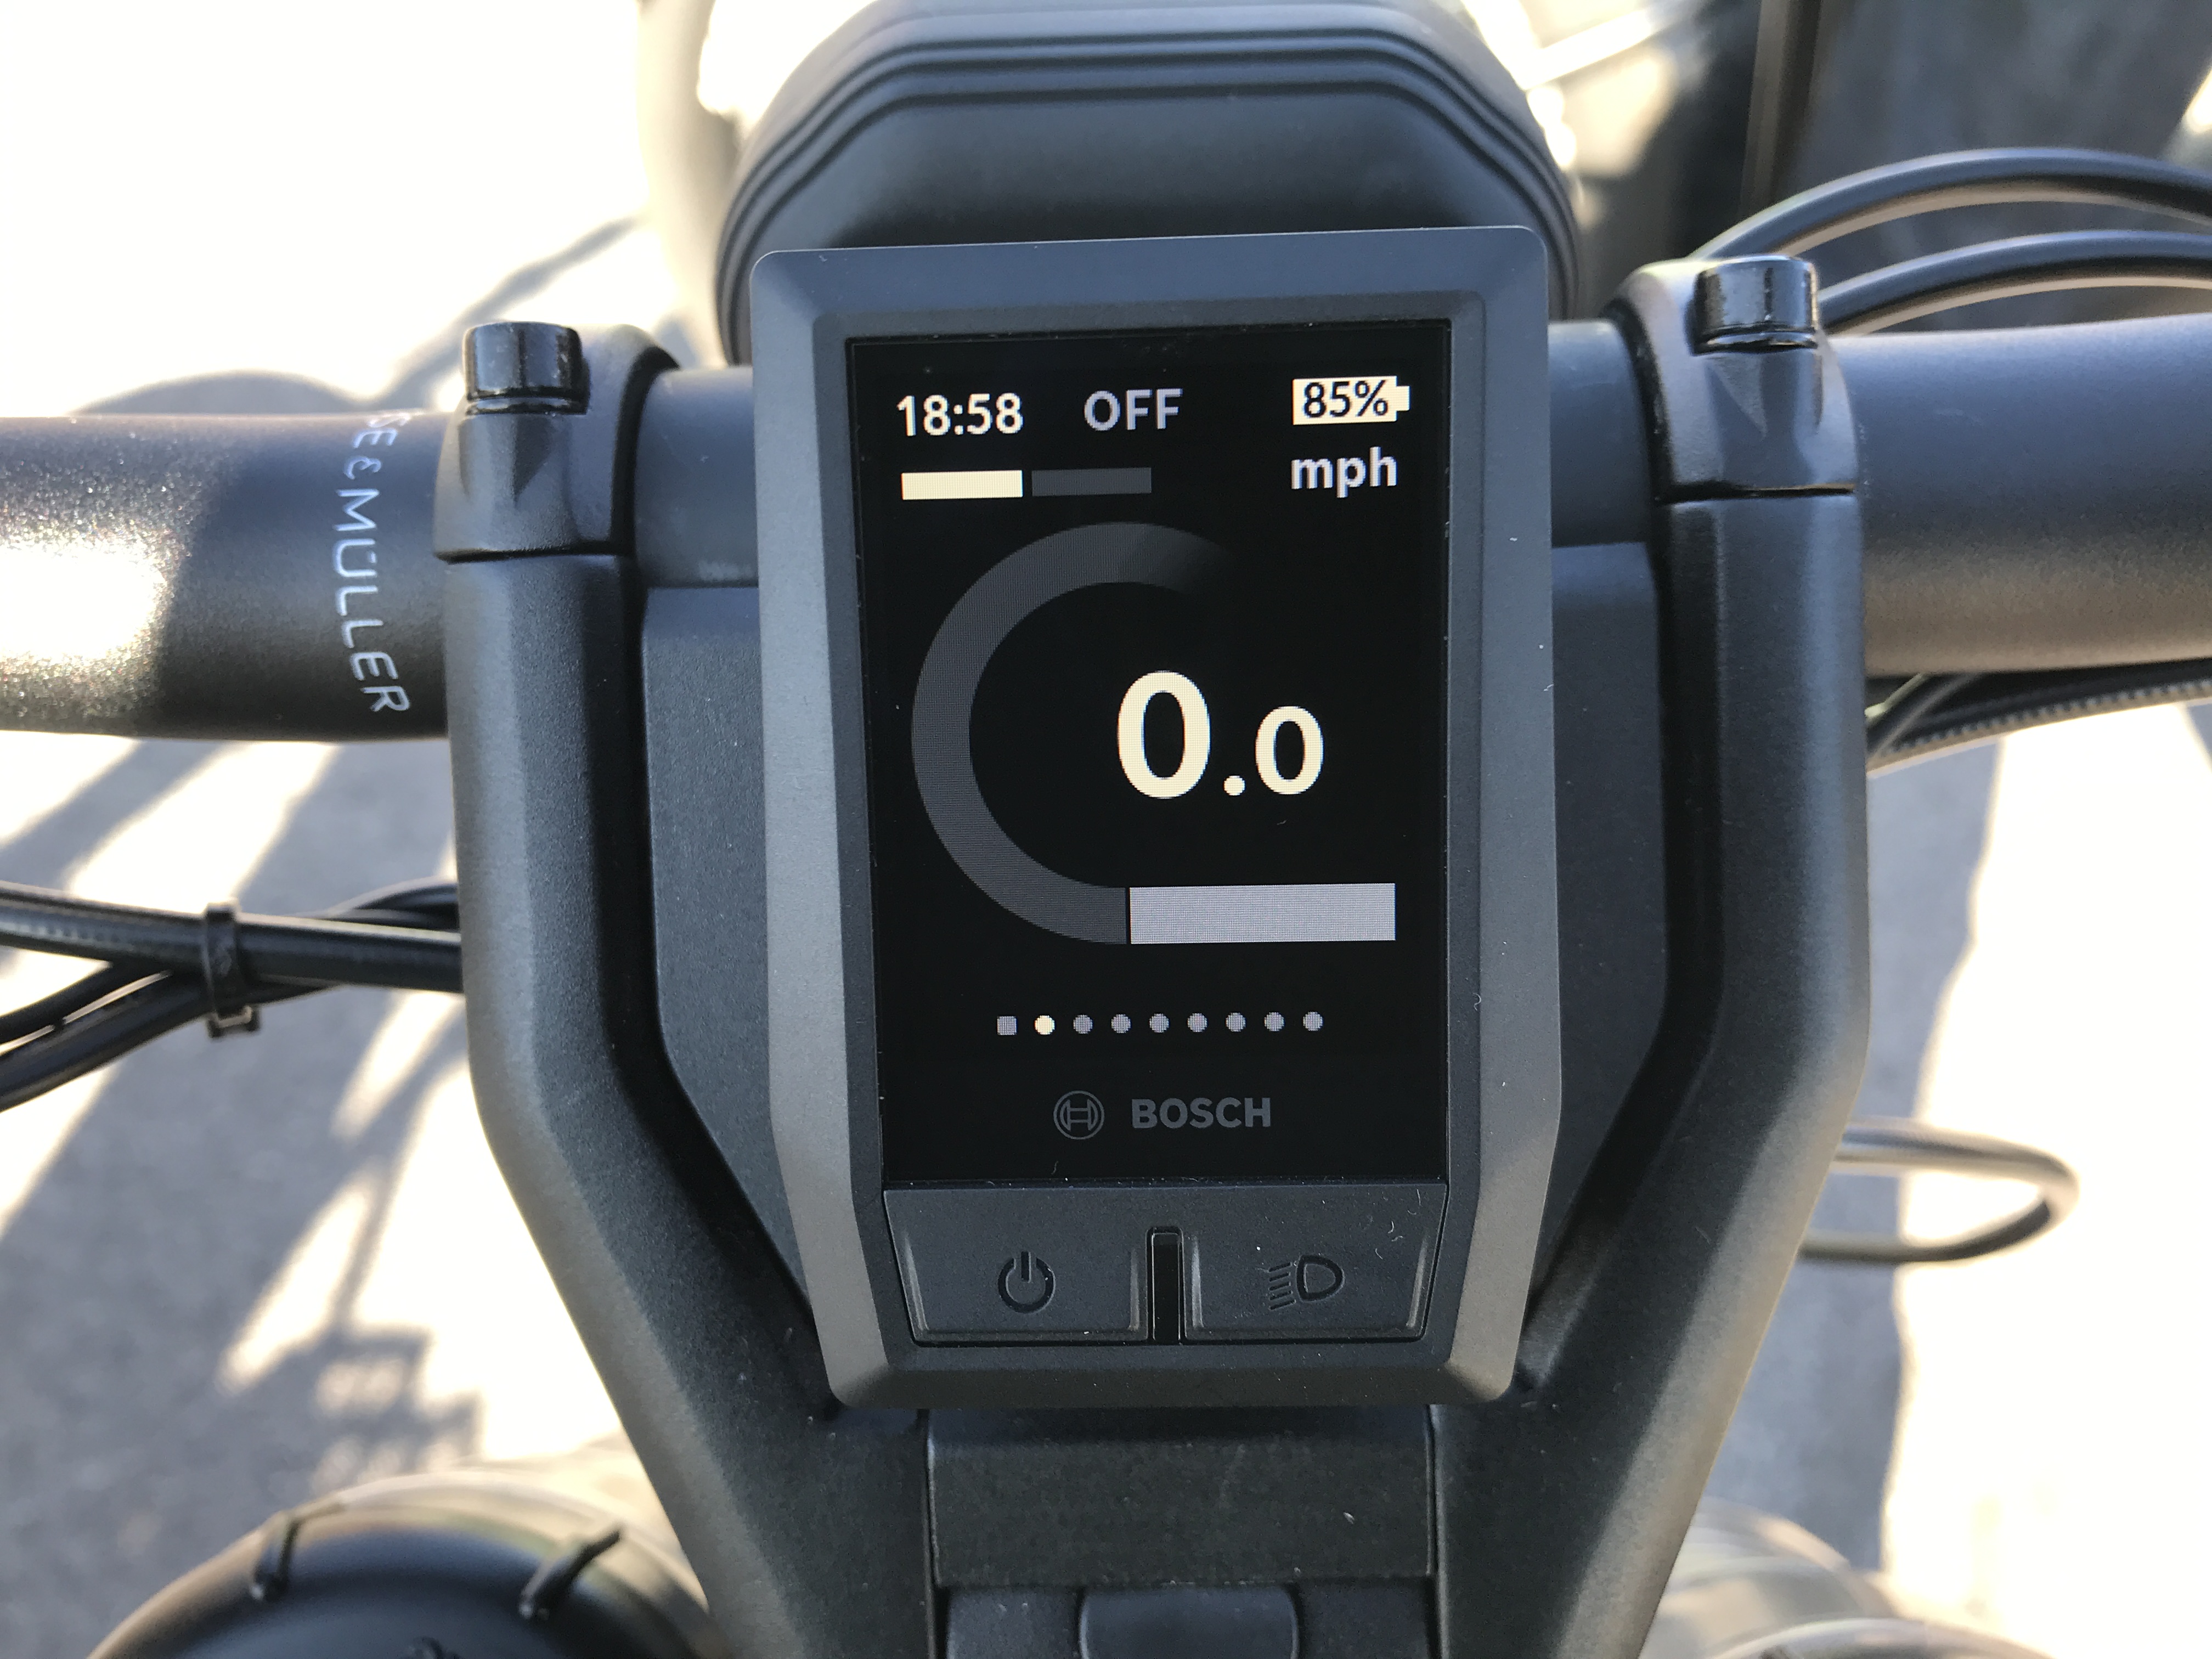 Bosch Kiox And SmartphoneHub Hands-on: Computers E-bikes Deserve